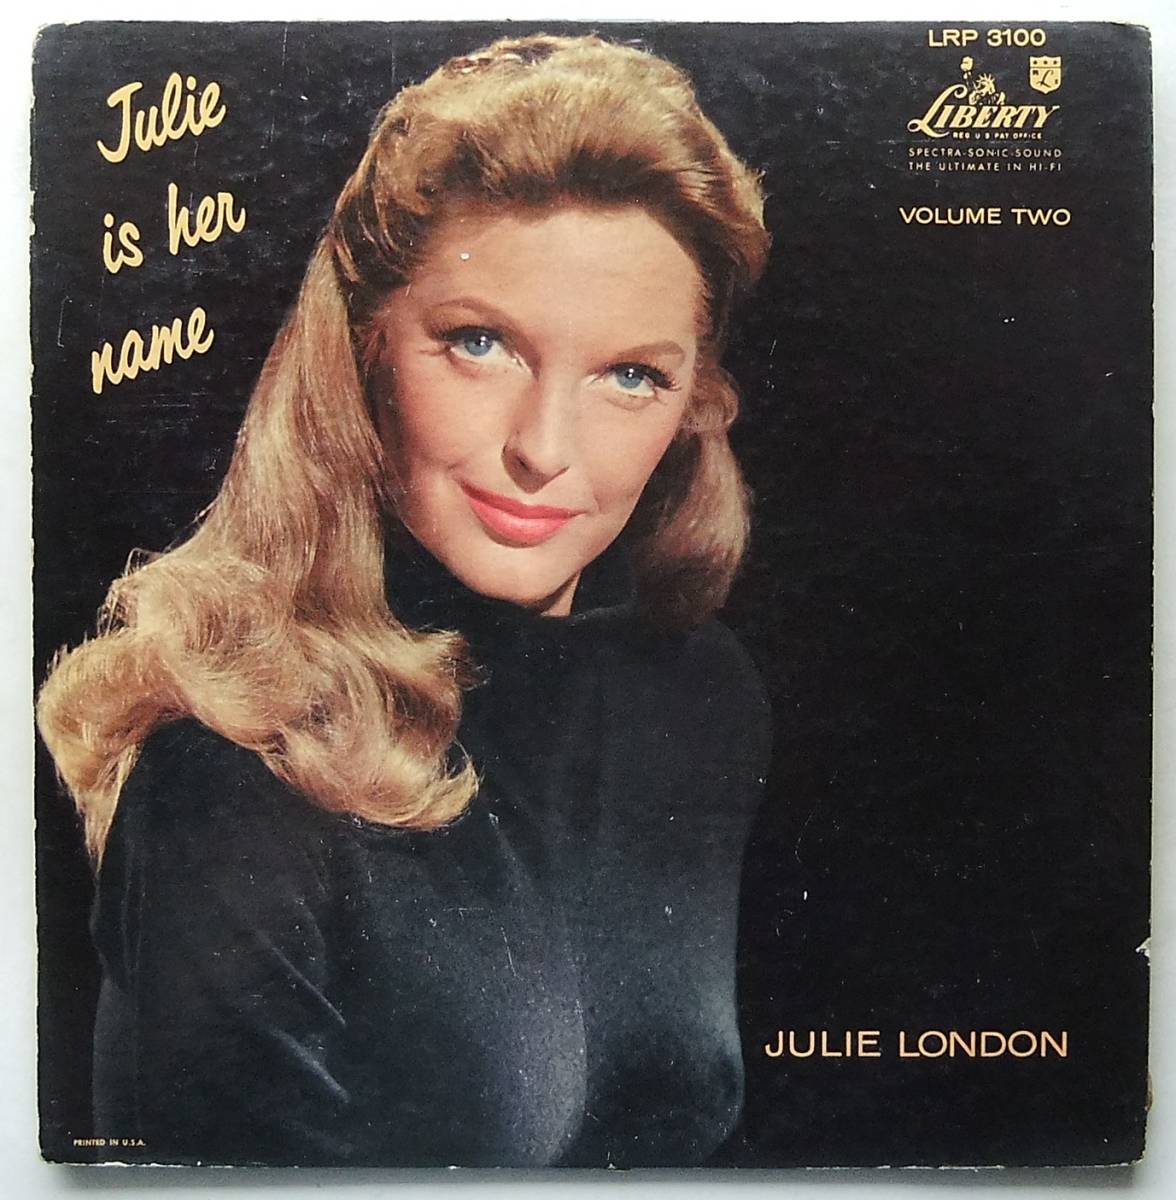 ◆ JULIE LONDON / Julie Is Her Name Vol. II ◆ Liberty LRP 3100 (turquoise:dg) ◆ V